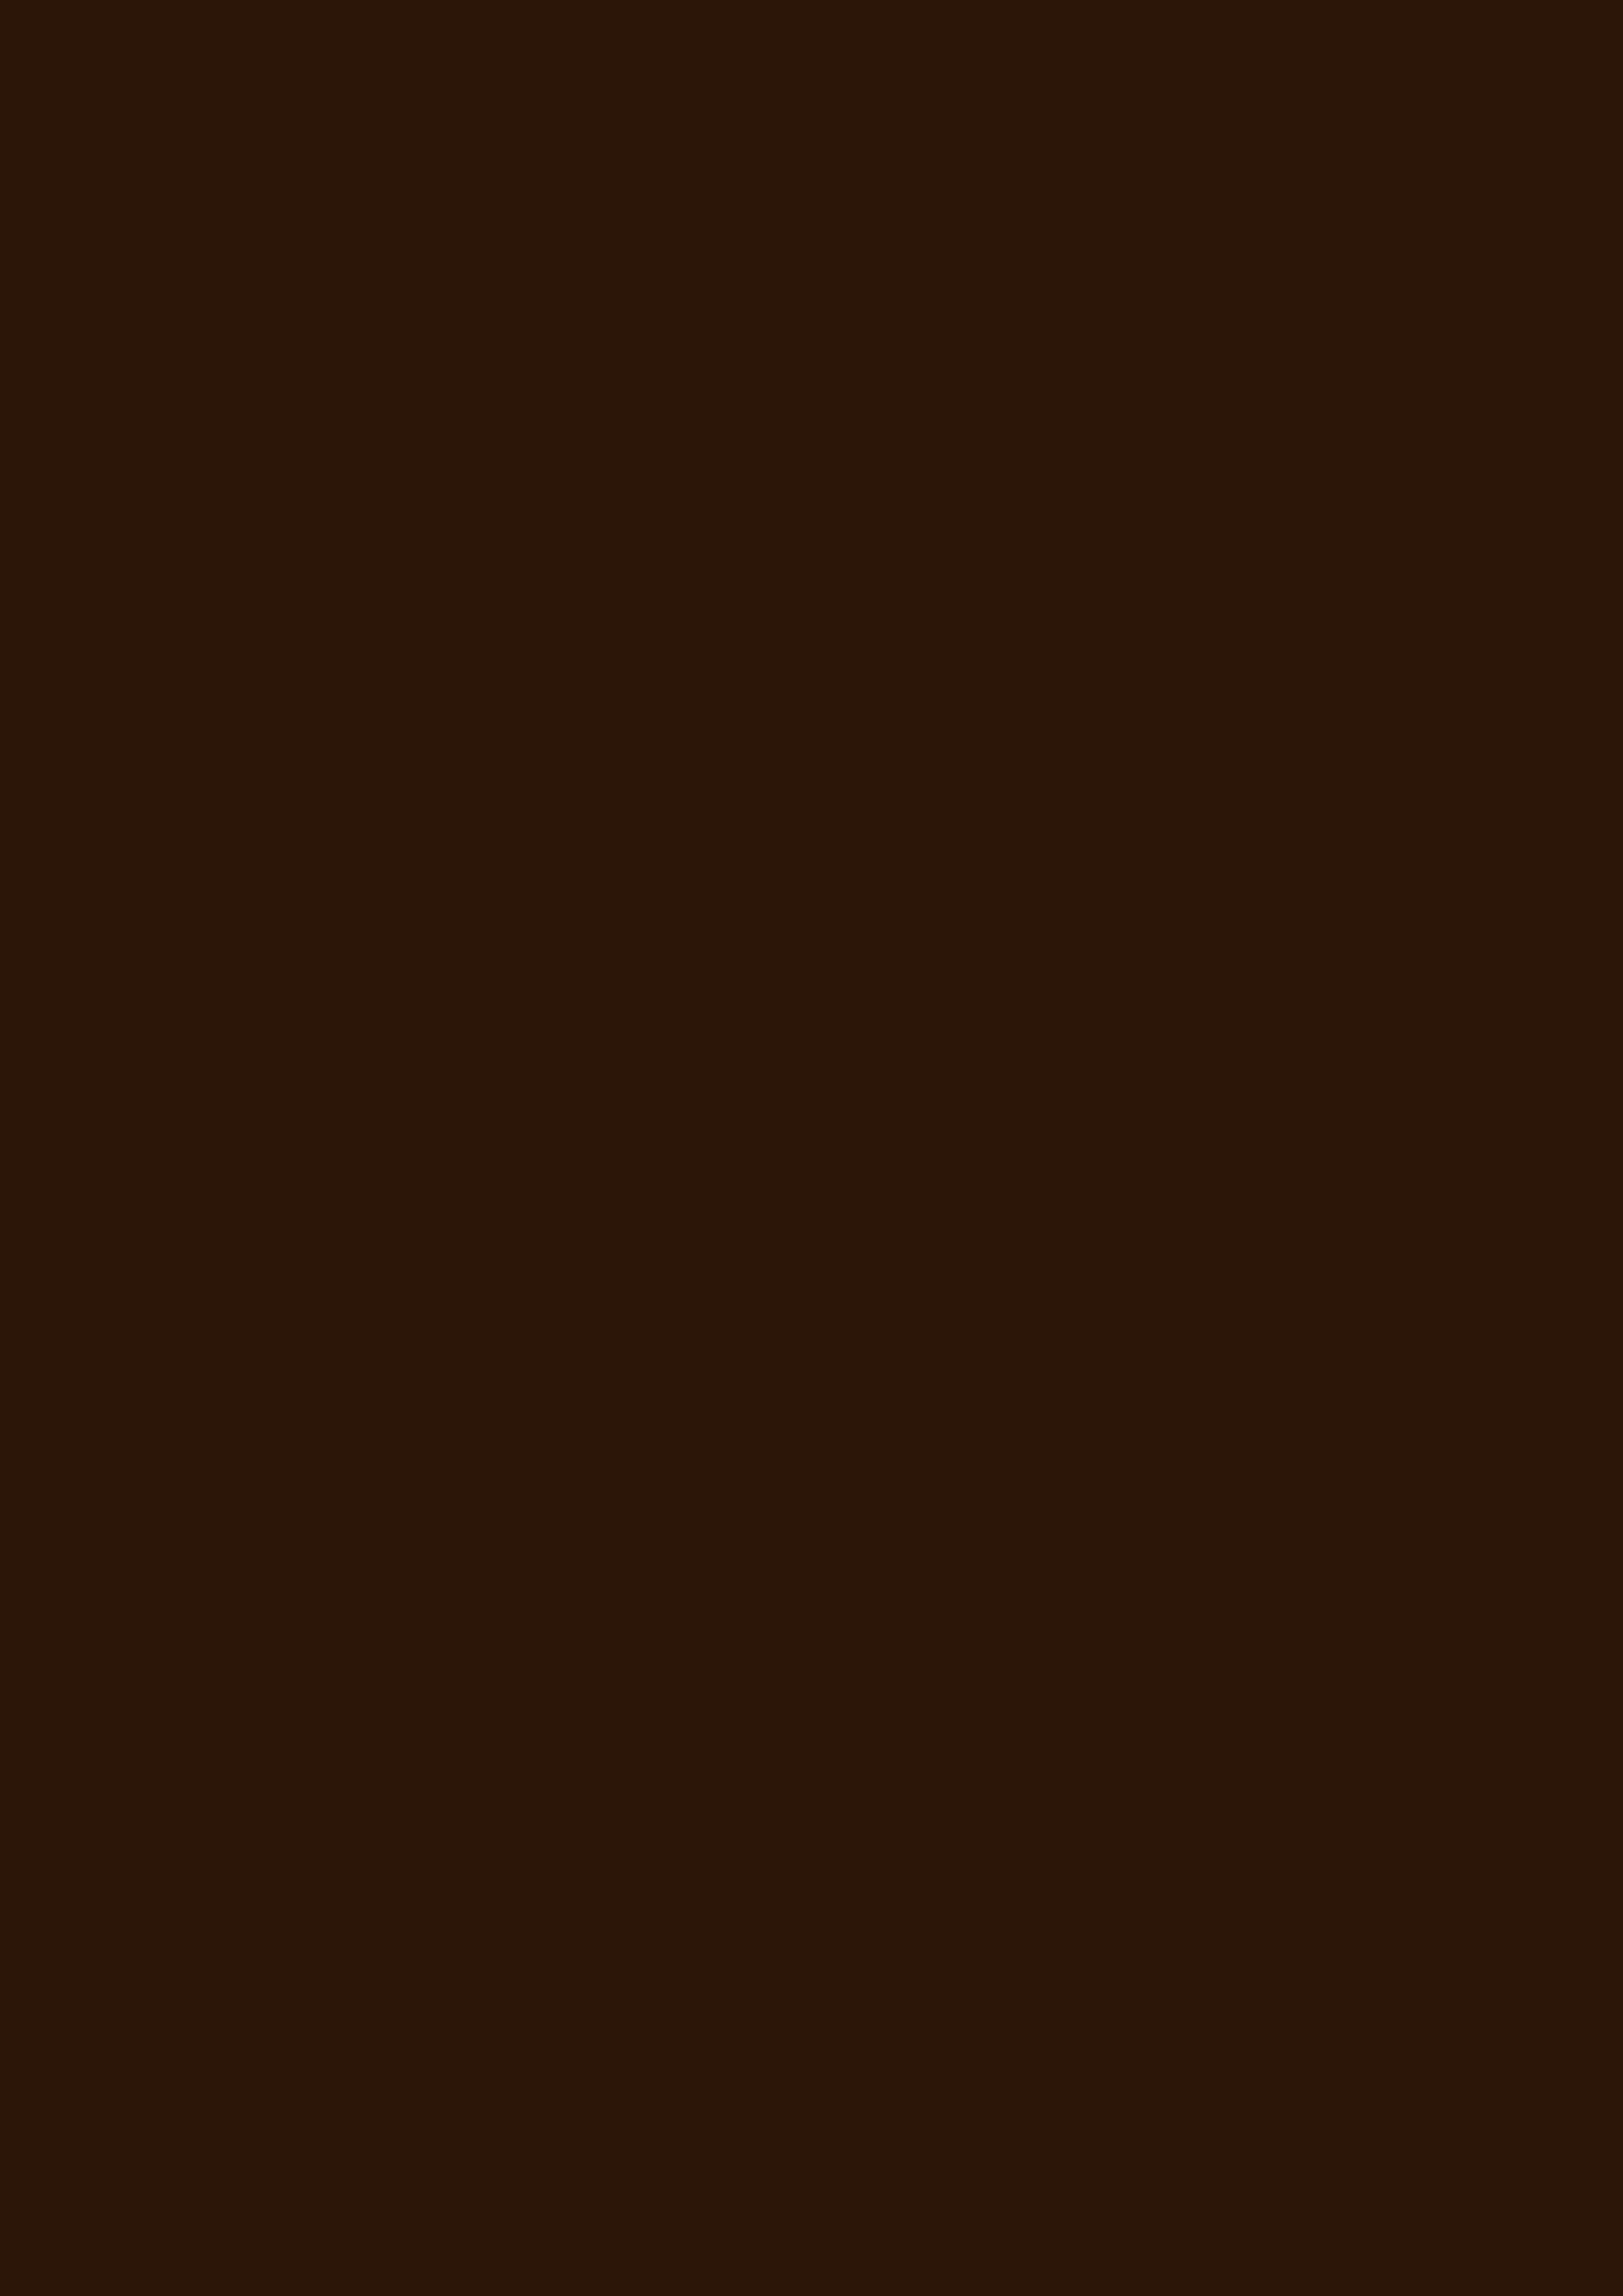 2480x3508 Zinnwaldite Brown Solid Color Background